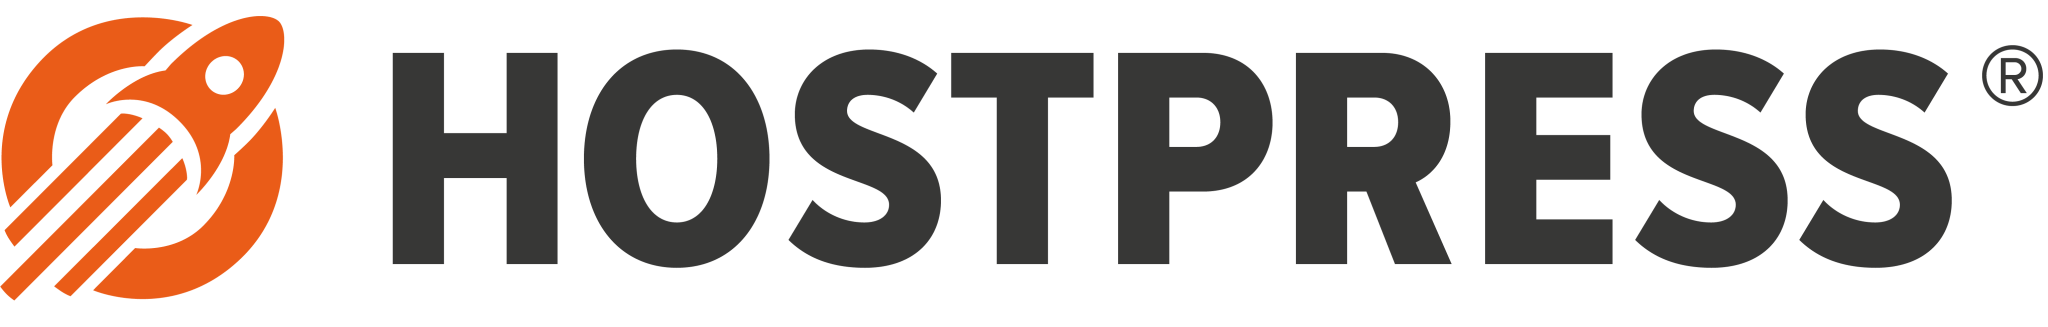 HostPress_Logo-Wortmarke_orange-grau_ohne-Slogan-2